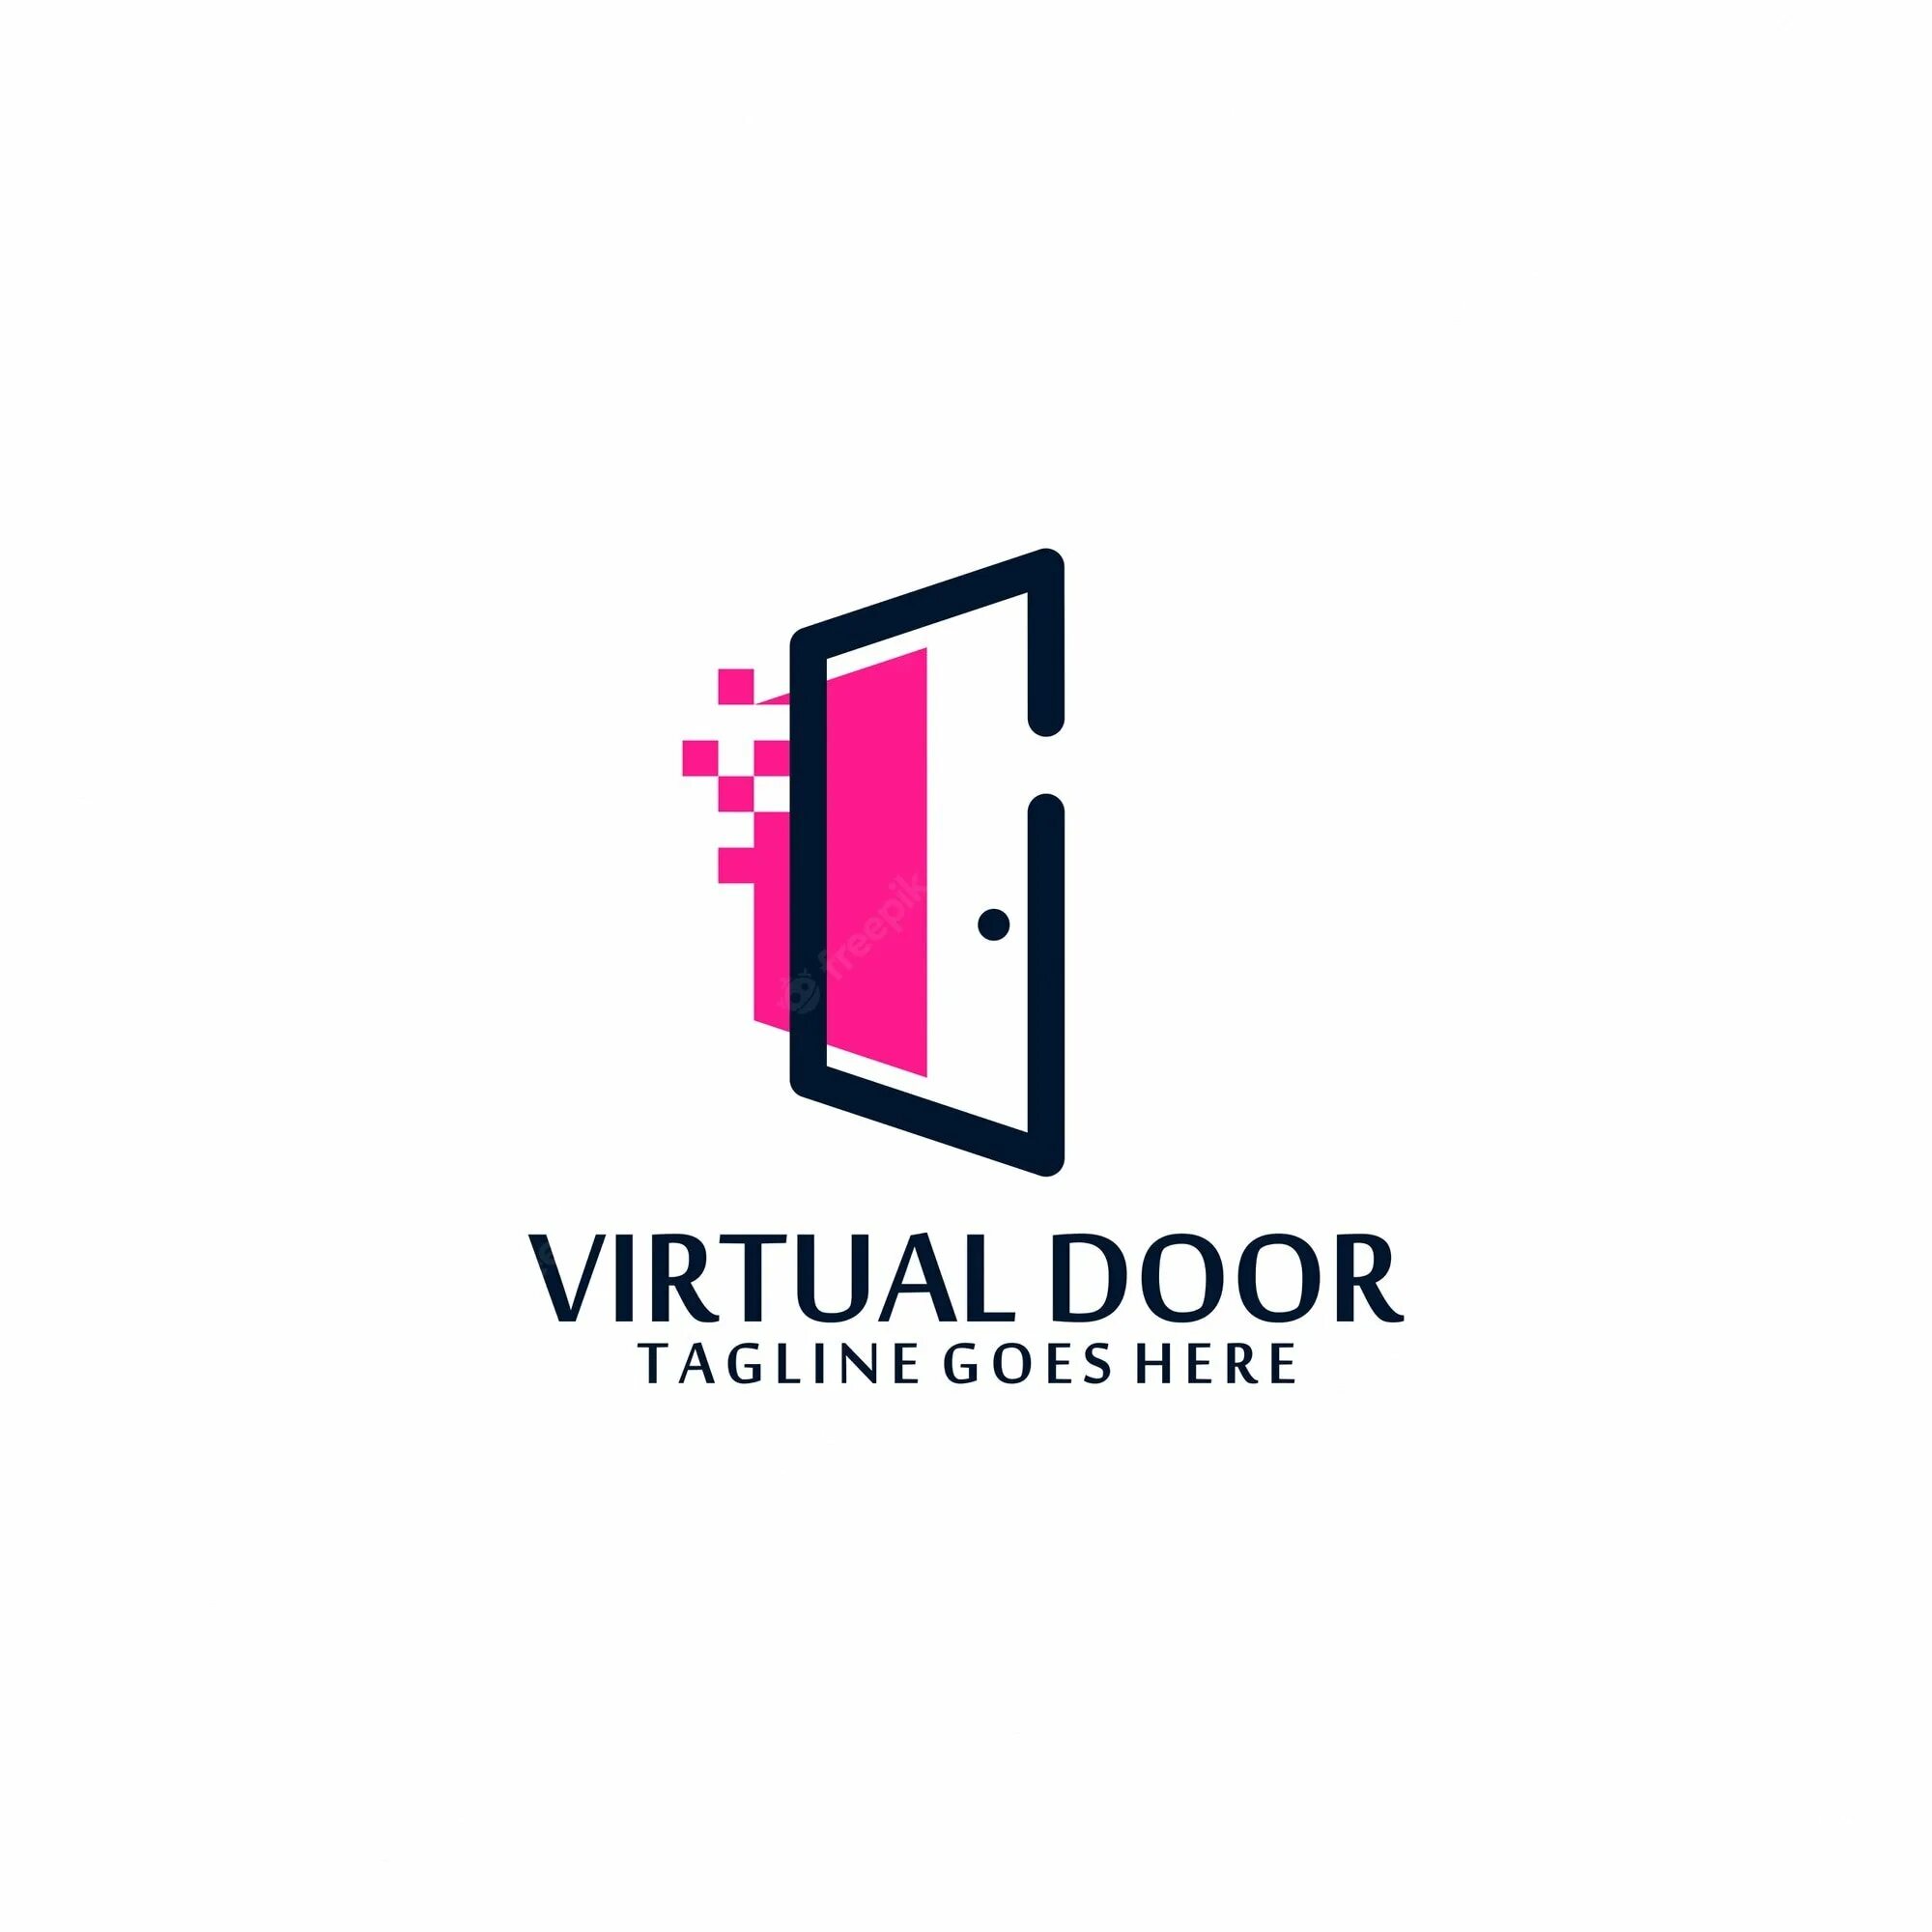 Двери лого. Логотип двери. Логотип магазина дверей. Логотип открытая дверь. Логотипы фирм дверей.